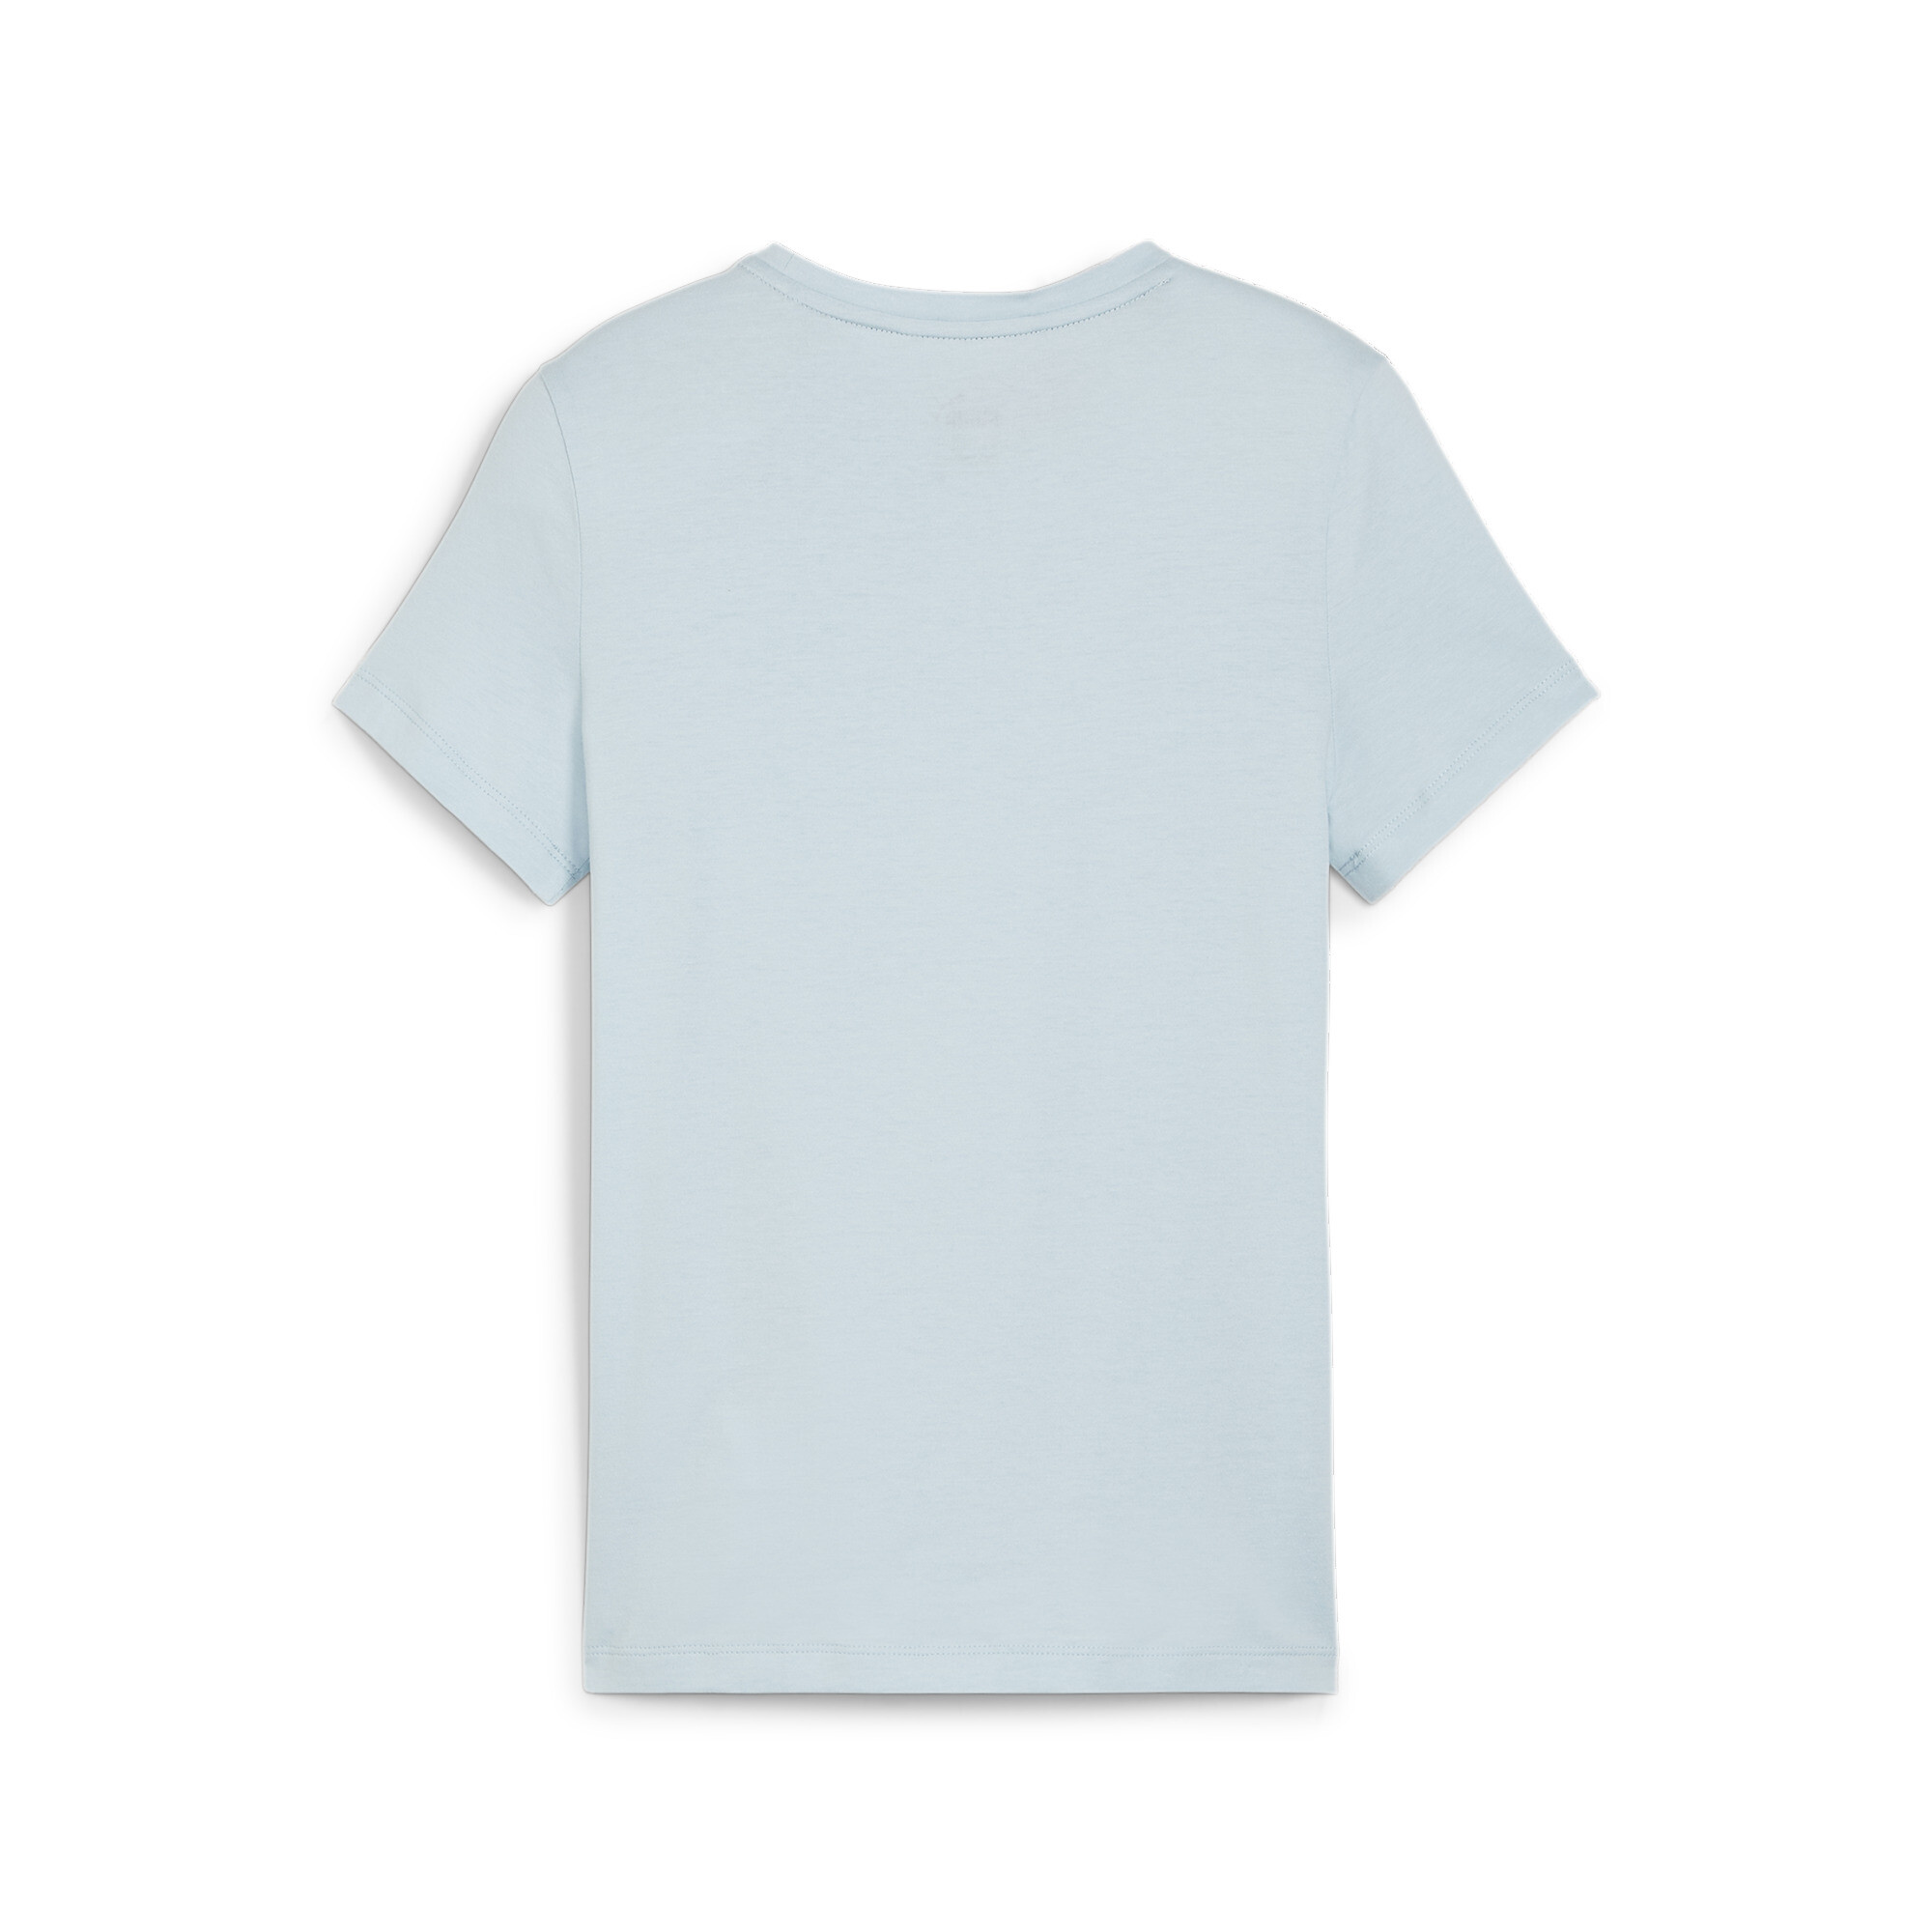 Women's Puma Essentials Logo Youth T-Shirt, Blue, Size 7-8Y, Guide